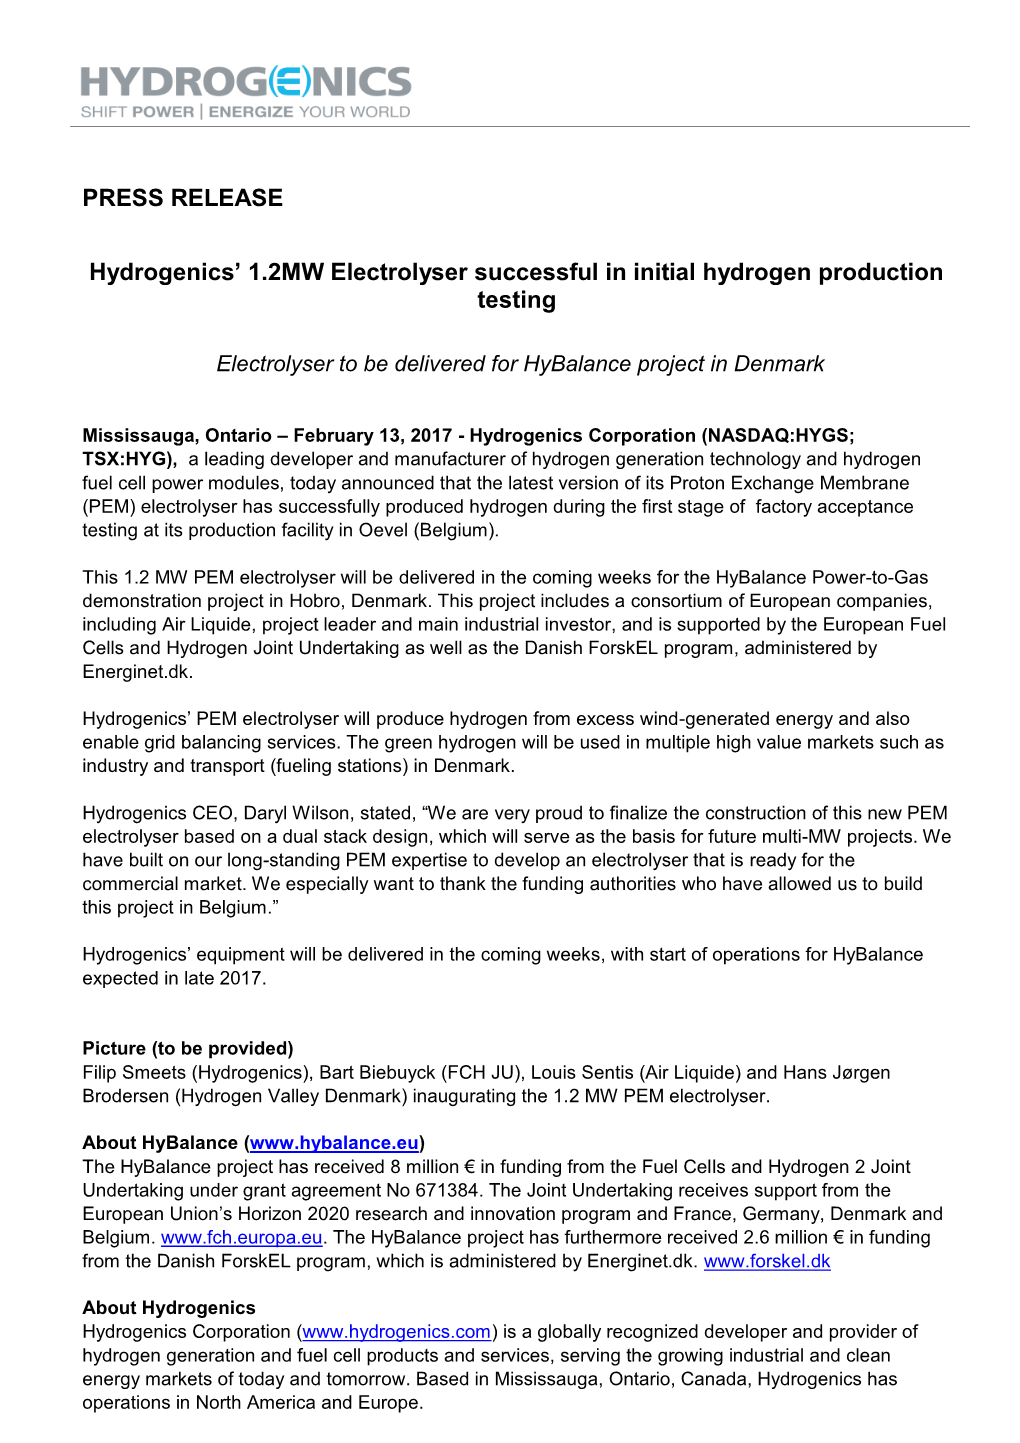 PRESS RELEASE Hydrogenics' 1.2MW Electrolyser Successful In